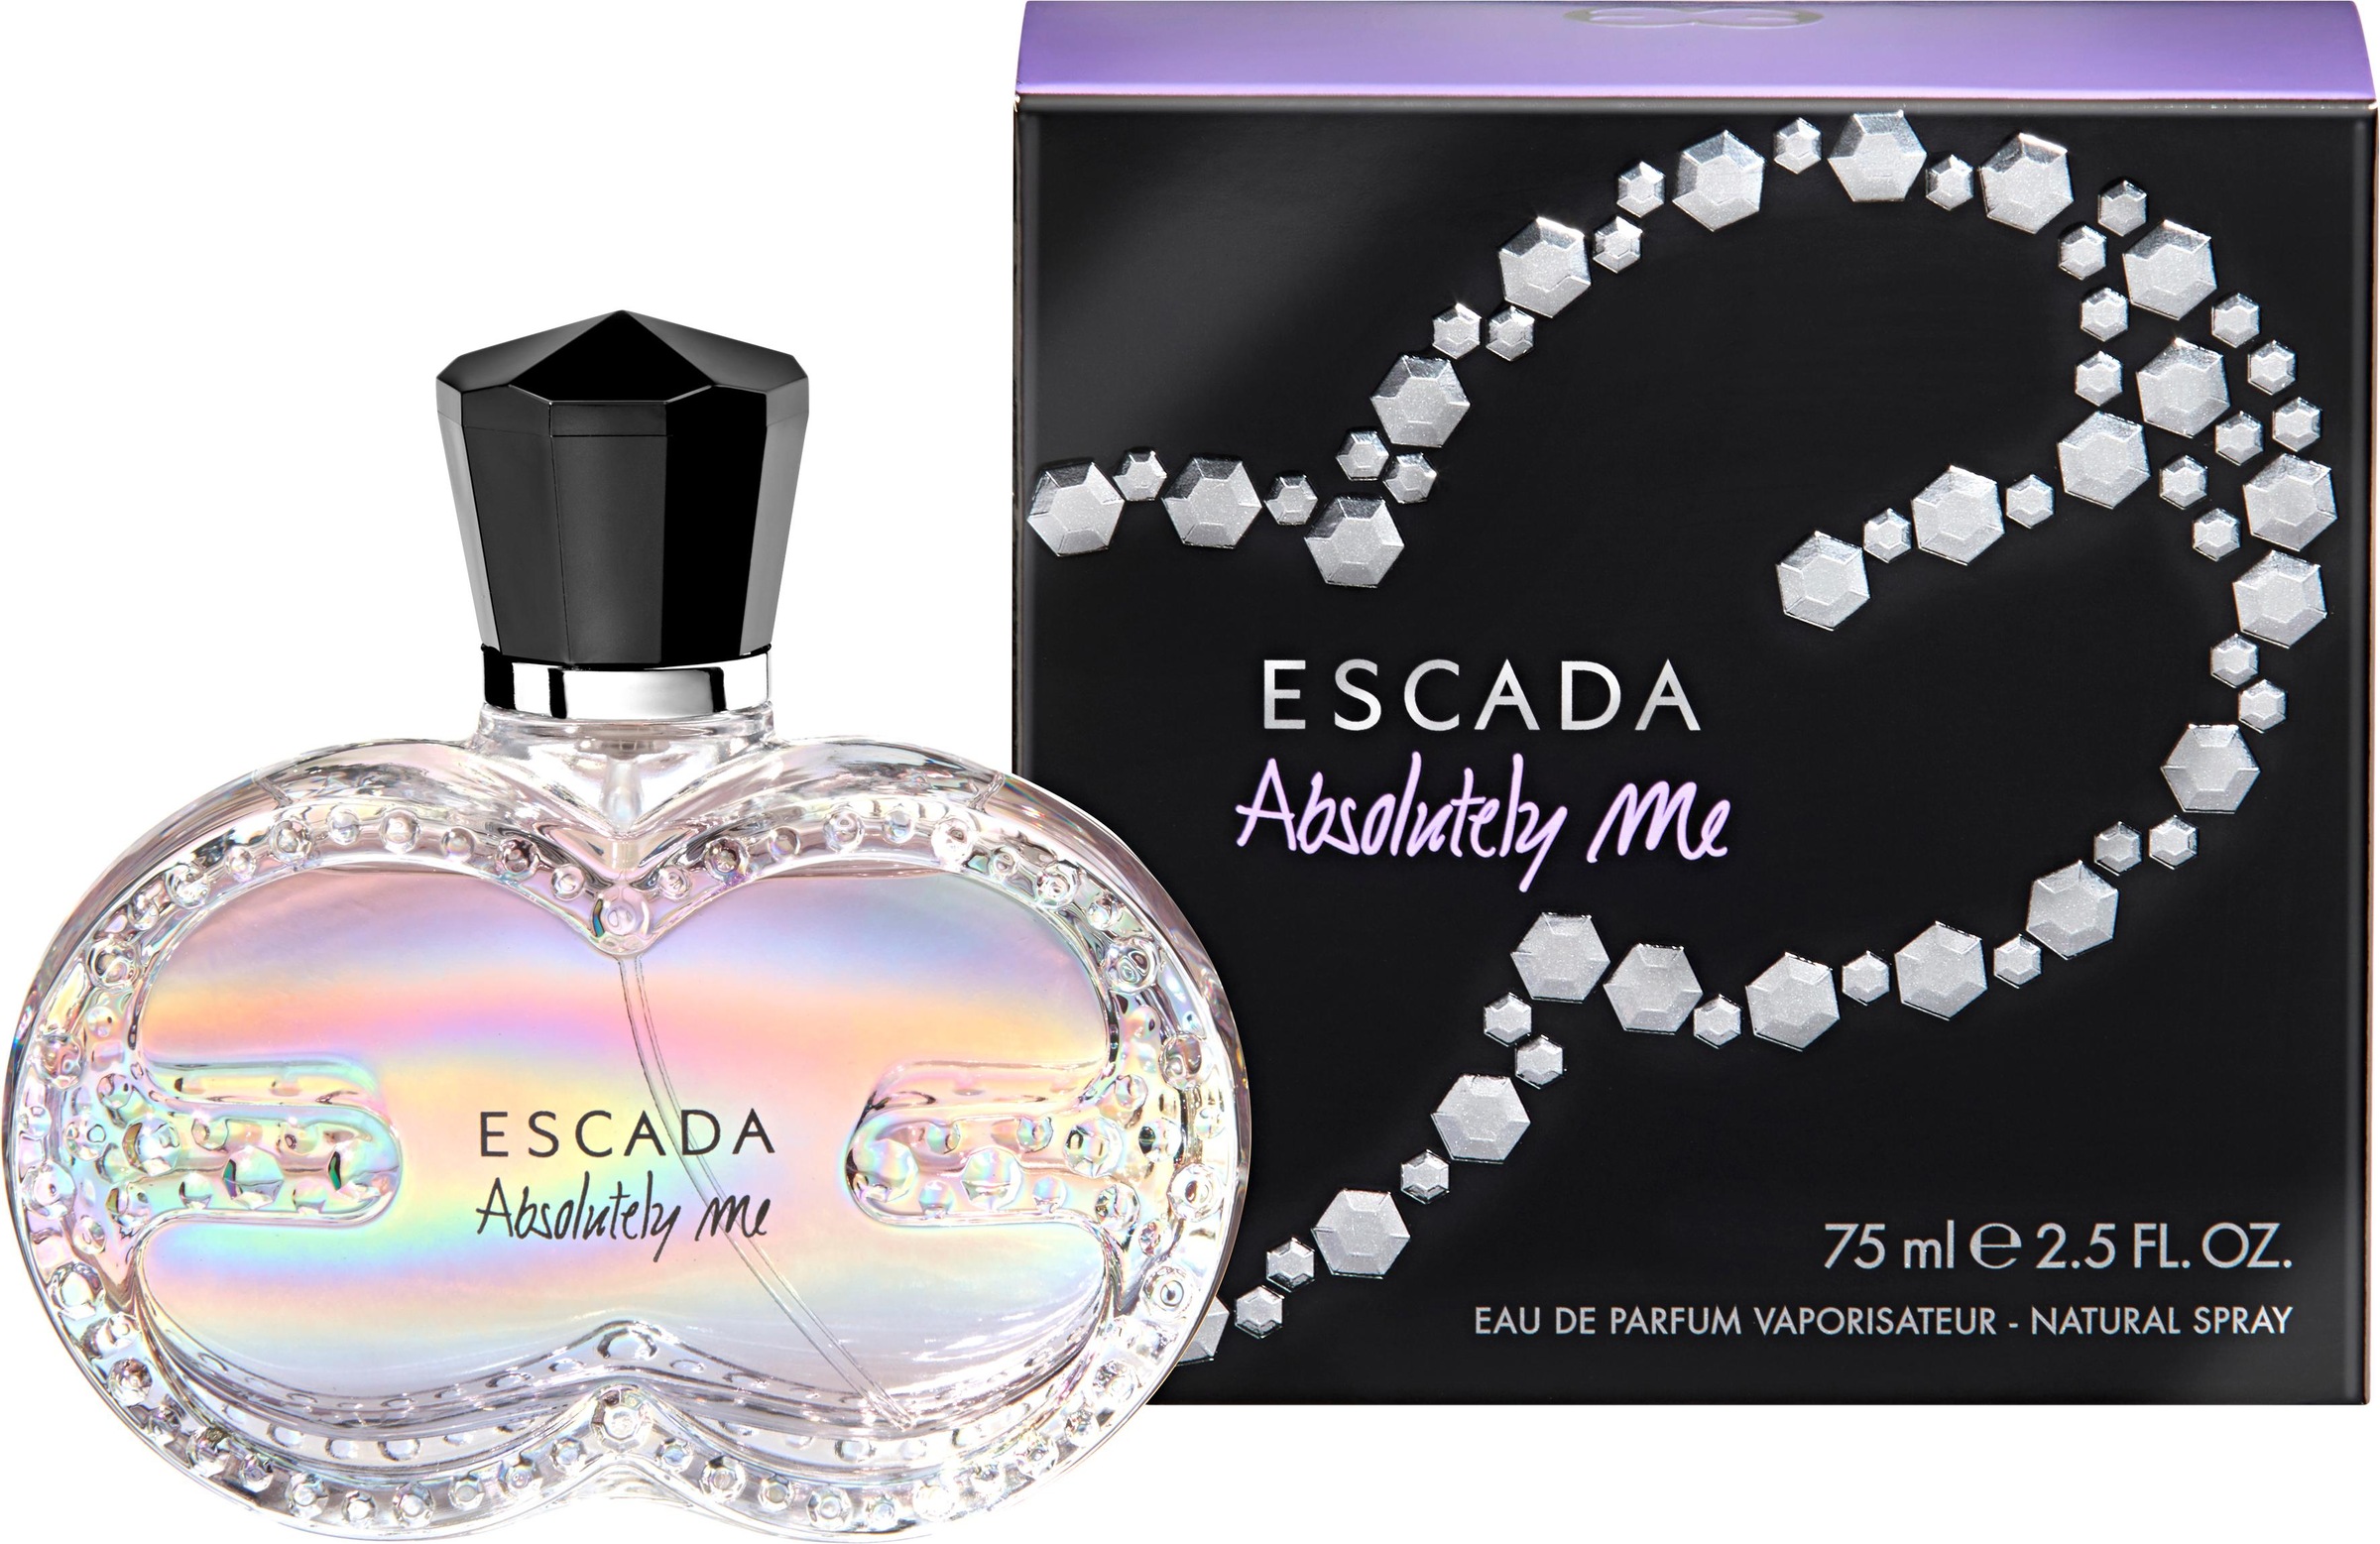 »Absolutely Eau Parfum de Me« kaufen Raten auf ESCADA